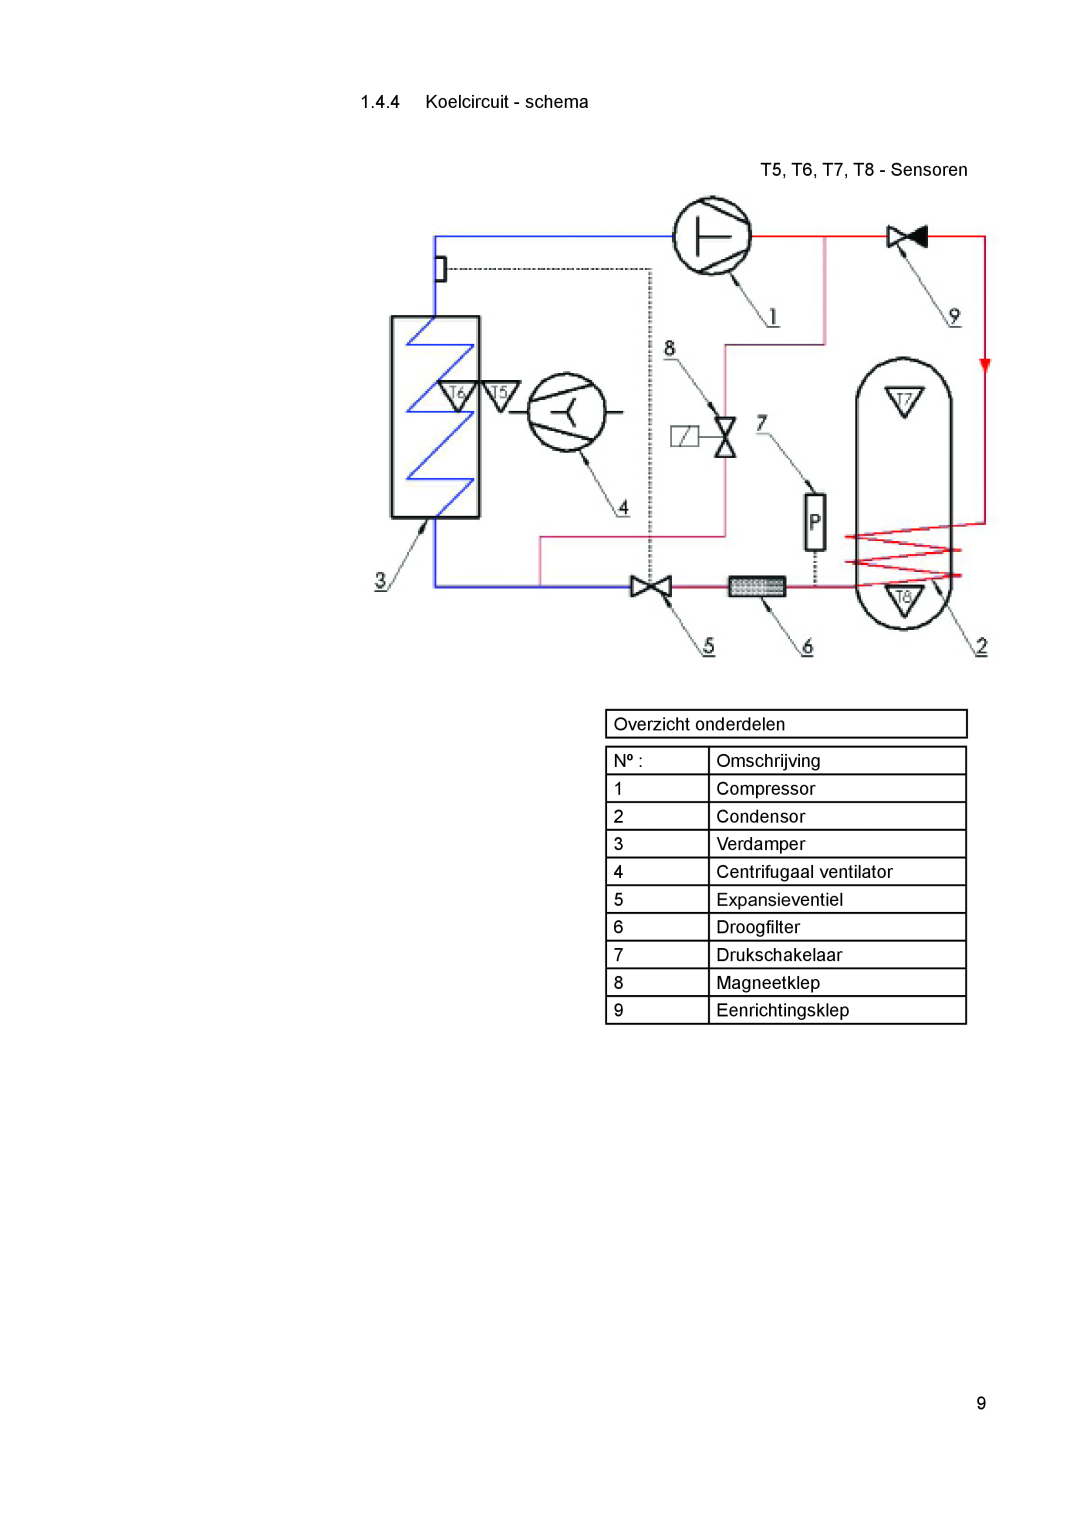 A.O. Smith 290 1.4.4Koelcircuit - schema, T5, T6, T7, T8 - Sensoren Overzicht onderdelen, Omschrijving, Compressor 